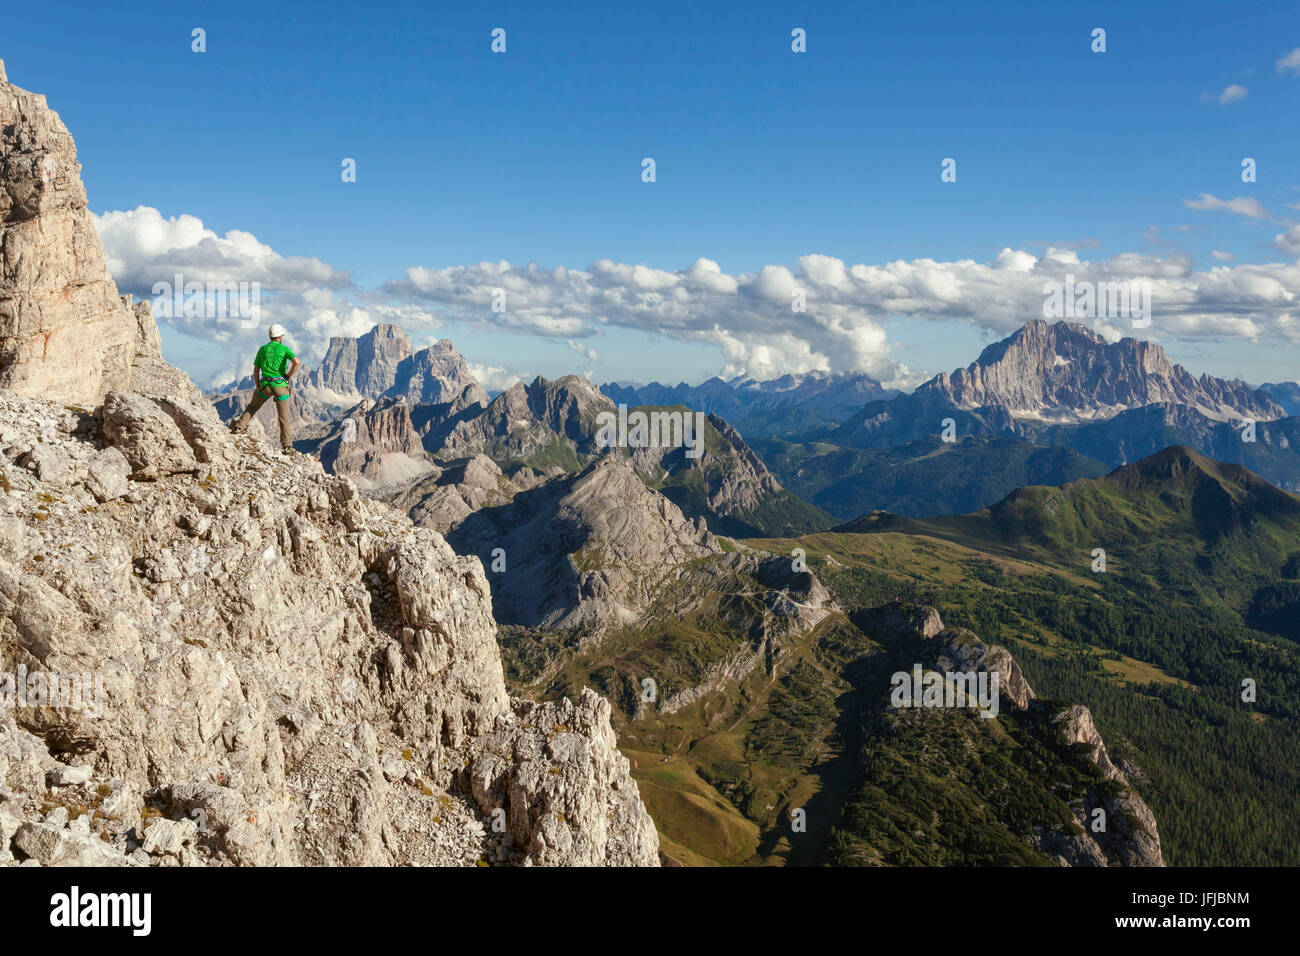 Europa, Italien, Veneto, Belluno, Wanderer am Wegesrand Kaiserjaeger, Piccolo Lagazuoi, Dolomiten Stockfoto